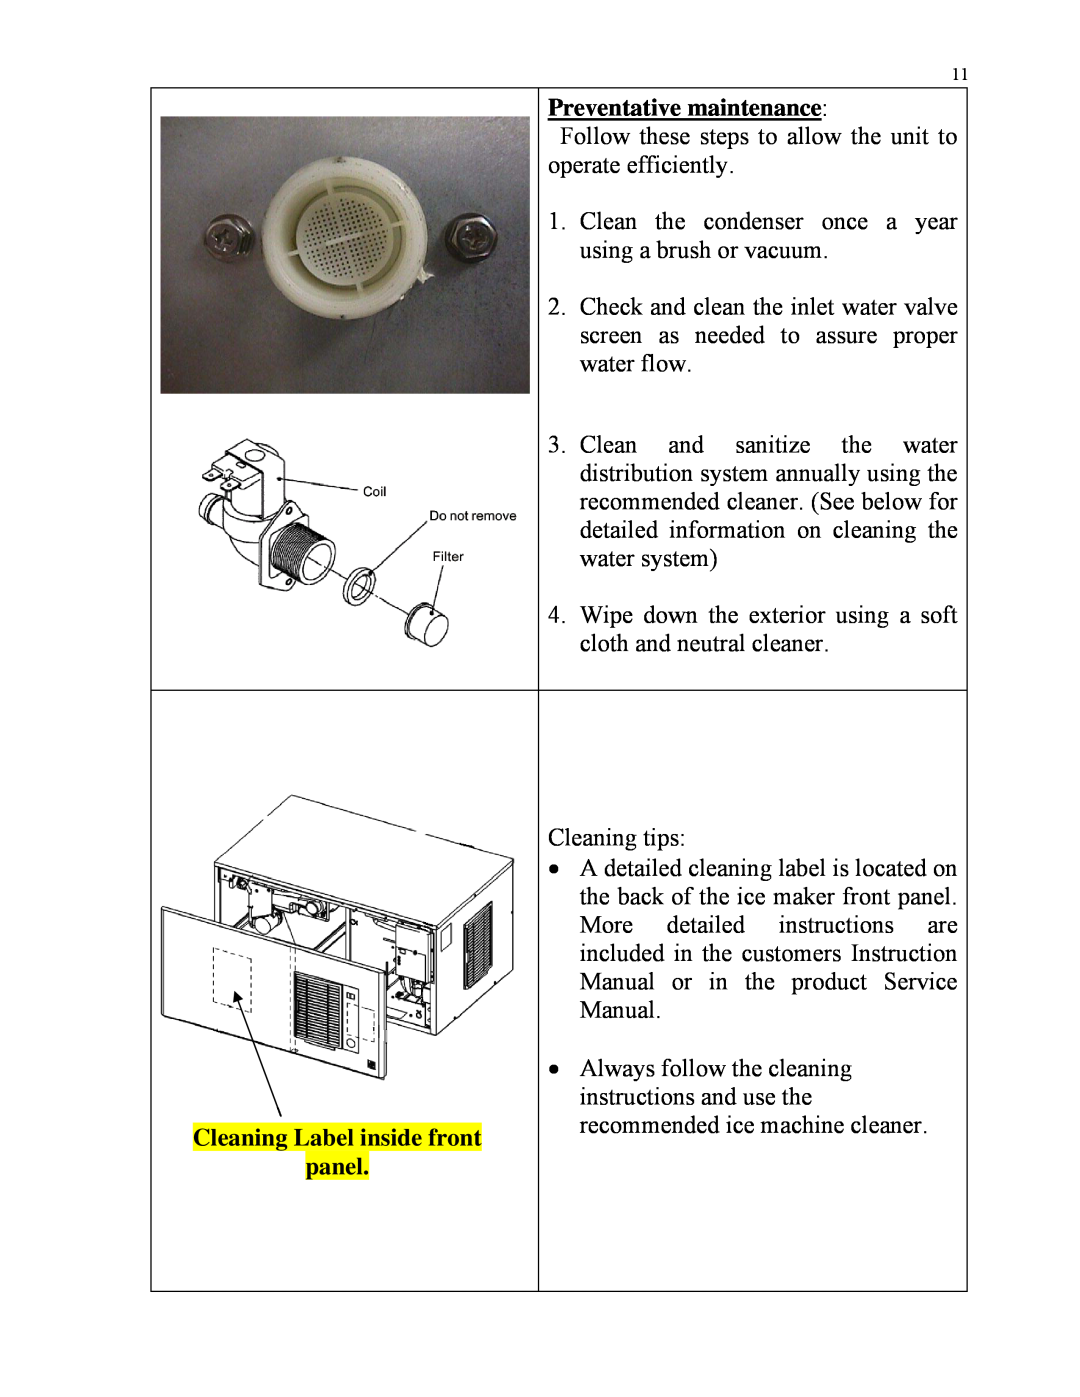 Hoshizaki IM-500SAA manual Preventative maintenance, recommended ice machine cleaner 